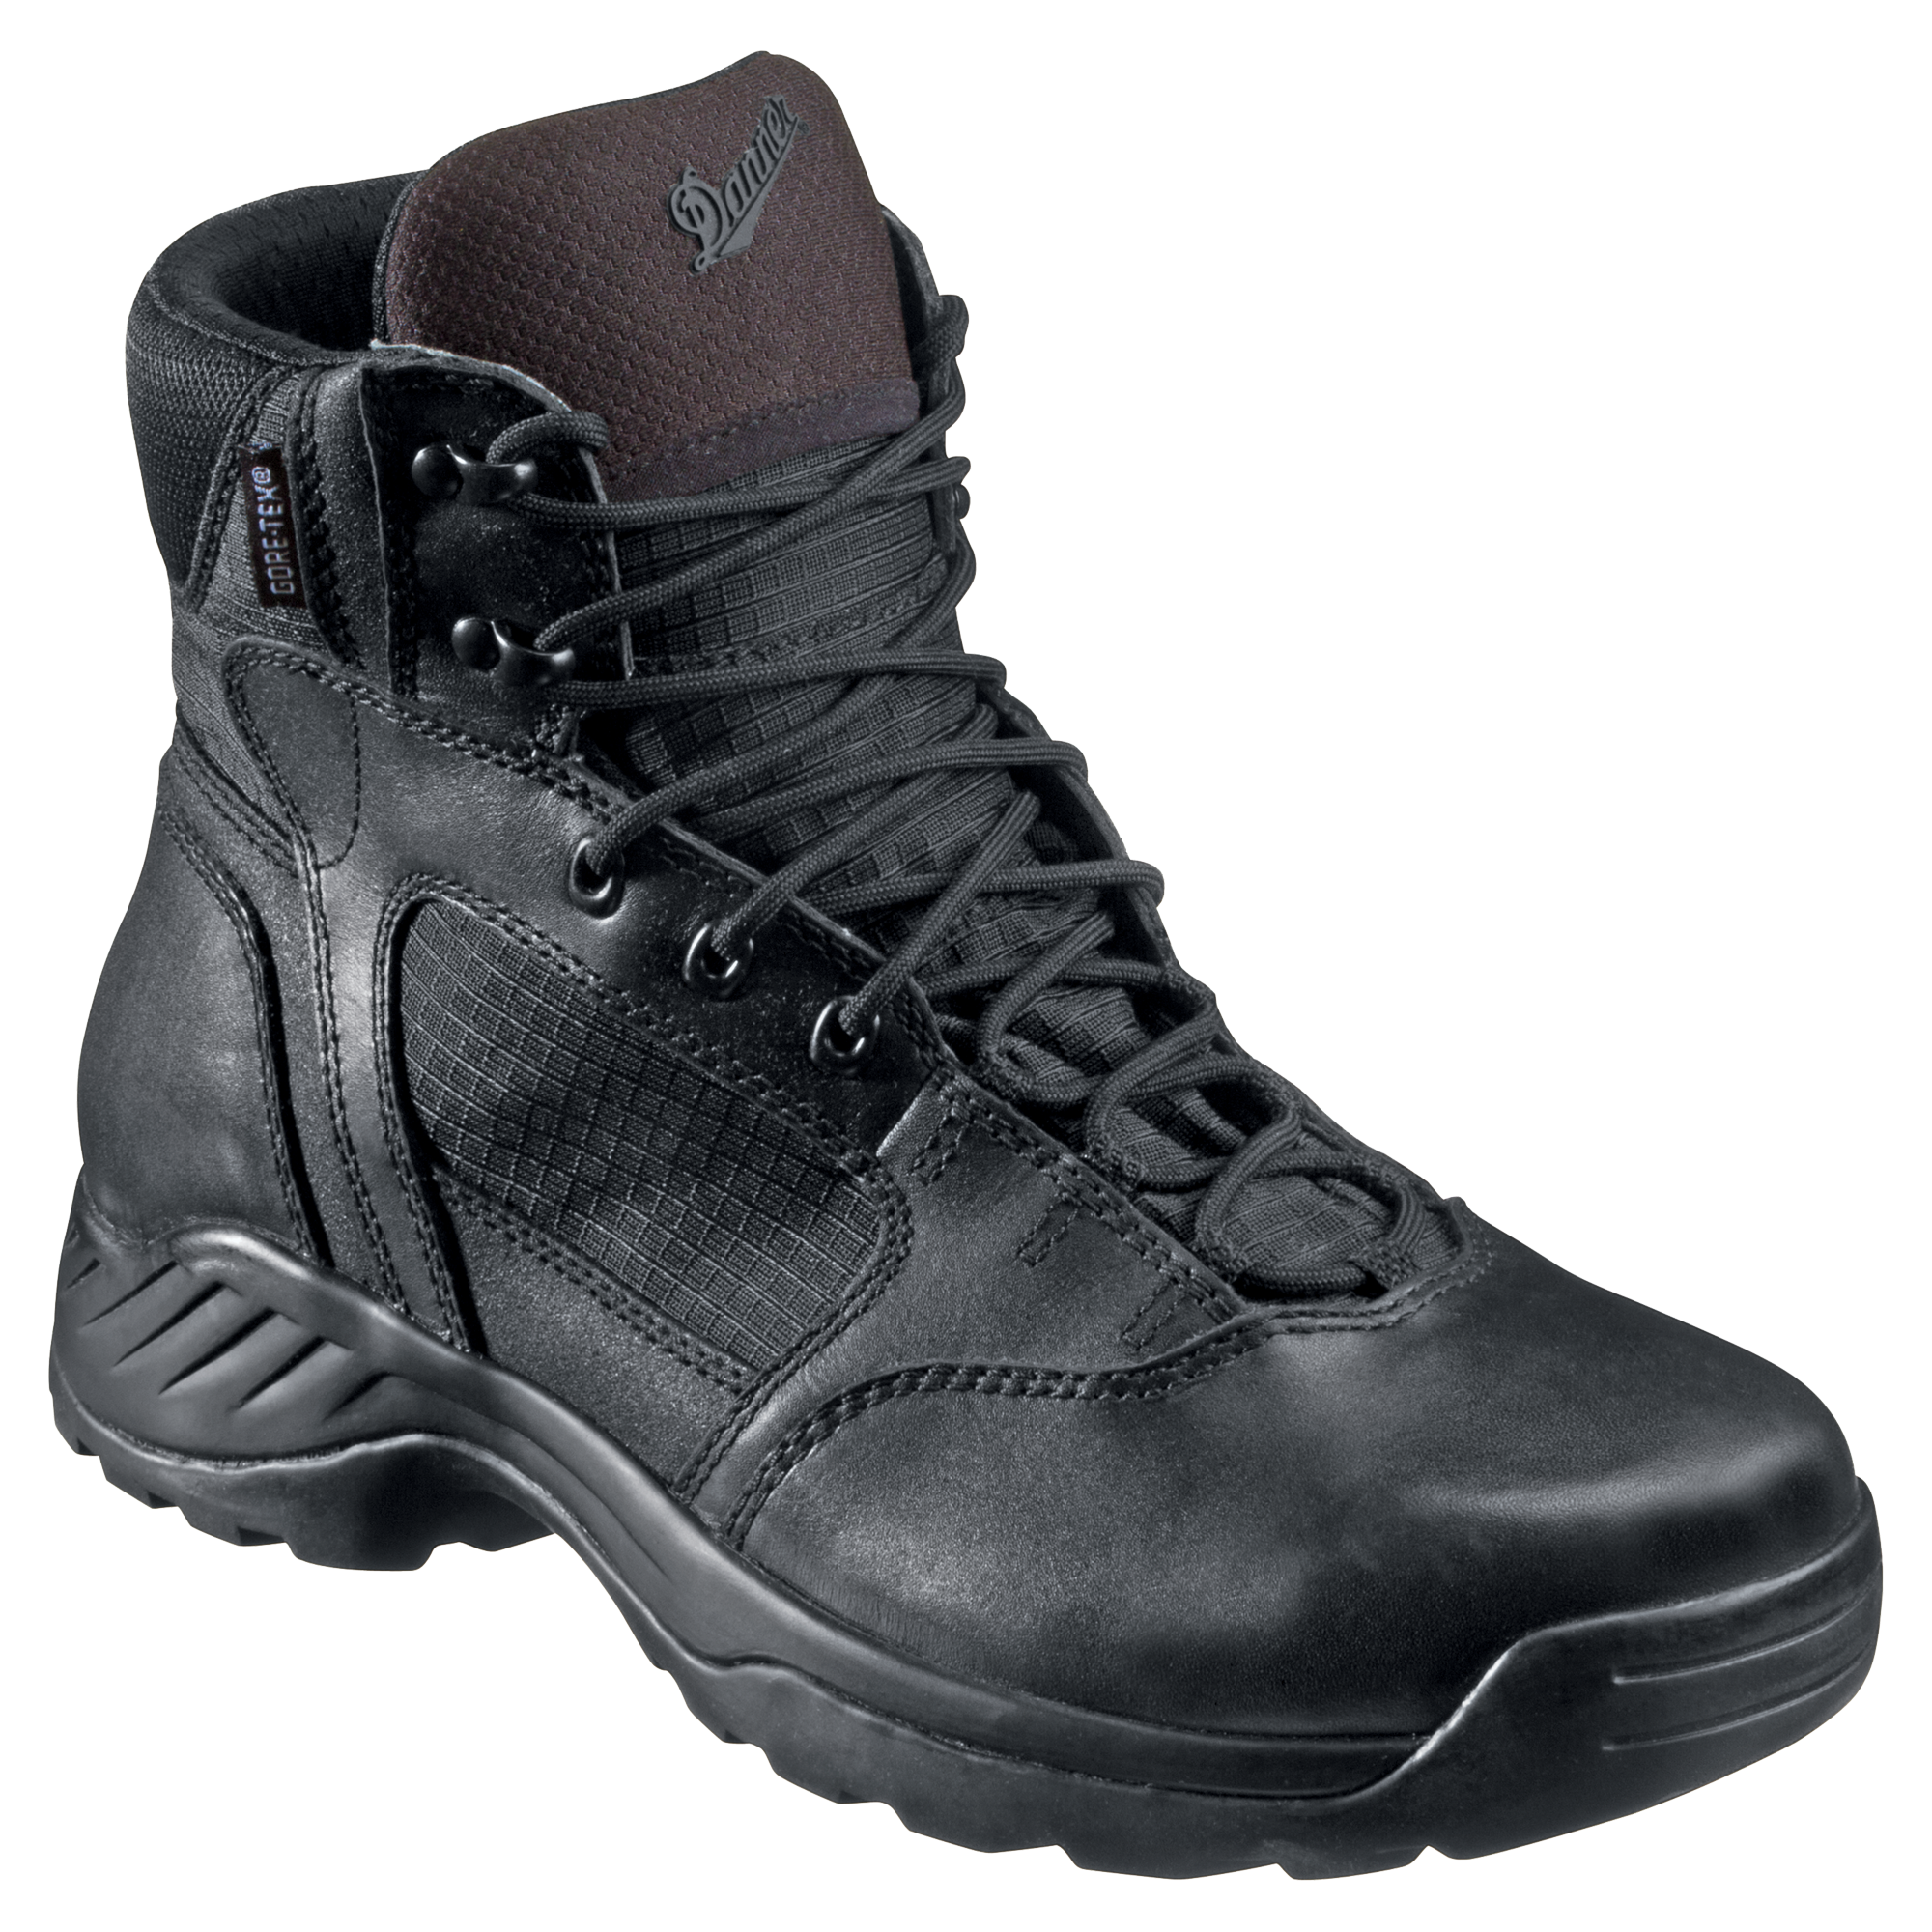 Danner Kinetic Side-Zip GORE-TEX Work Boots for Men - Black - 10M